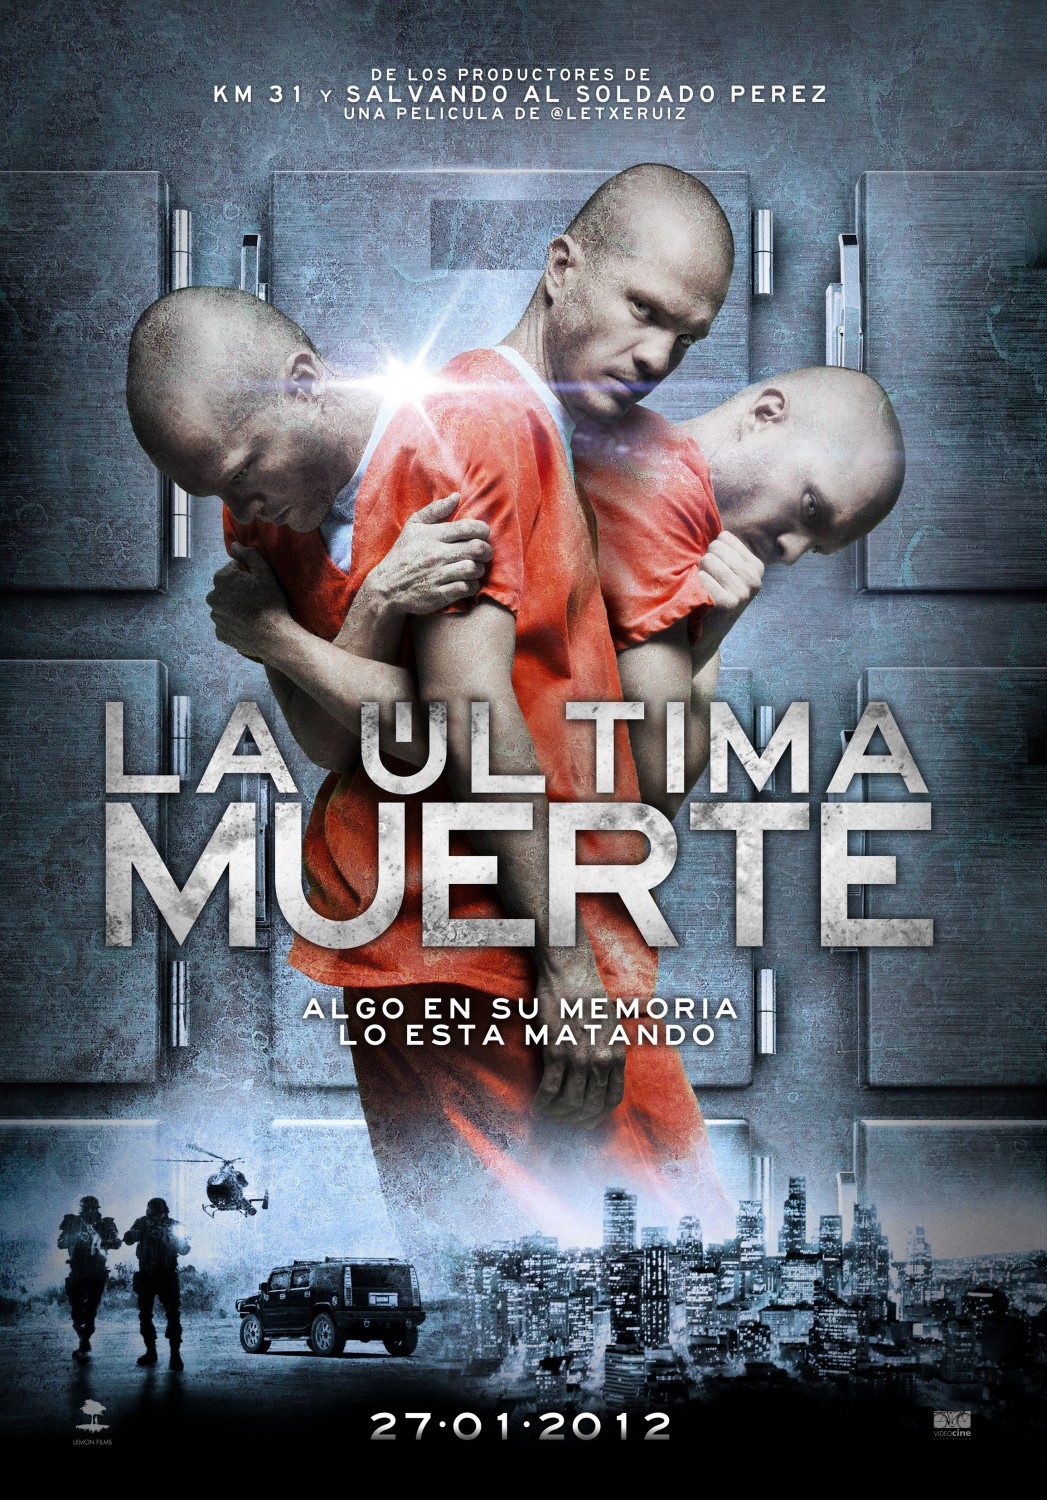 Extra Large Movie Poster Image for La última muerte (#1 of 3)